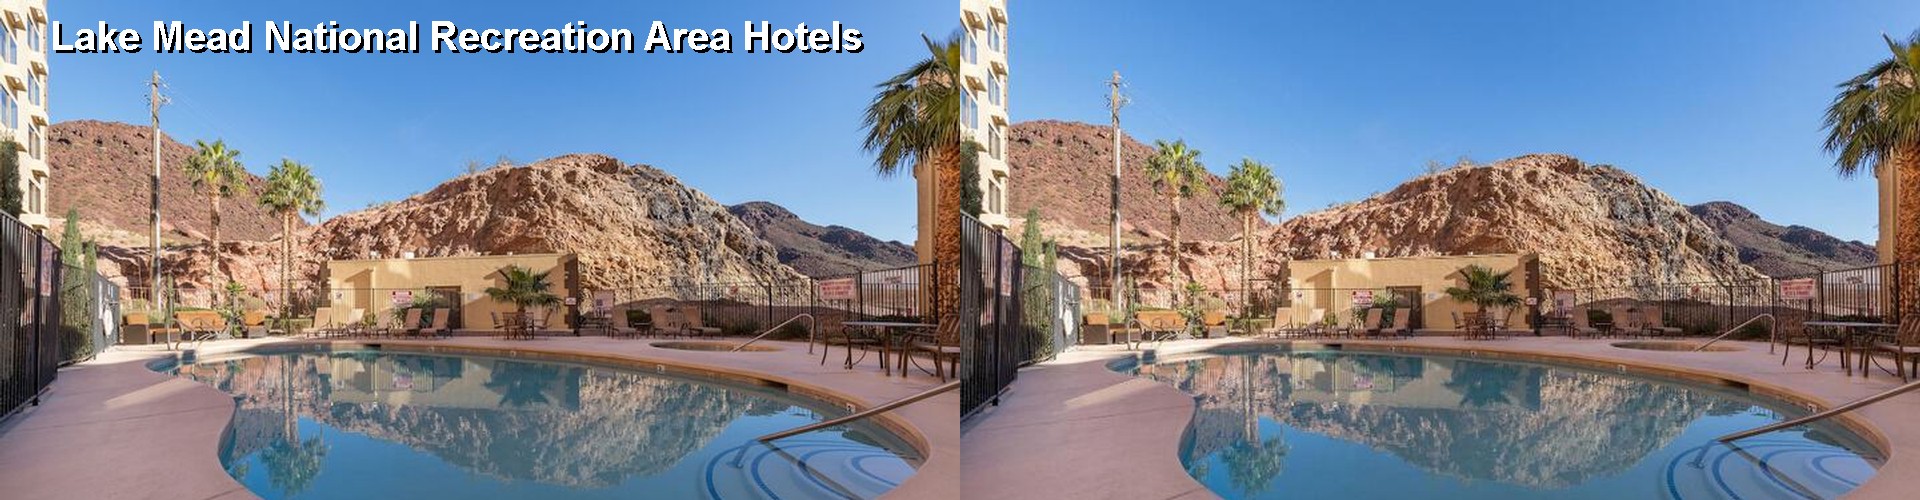 3 Best Hotels near Lake Mead National Recreation Area